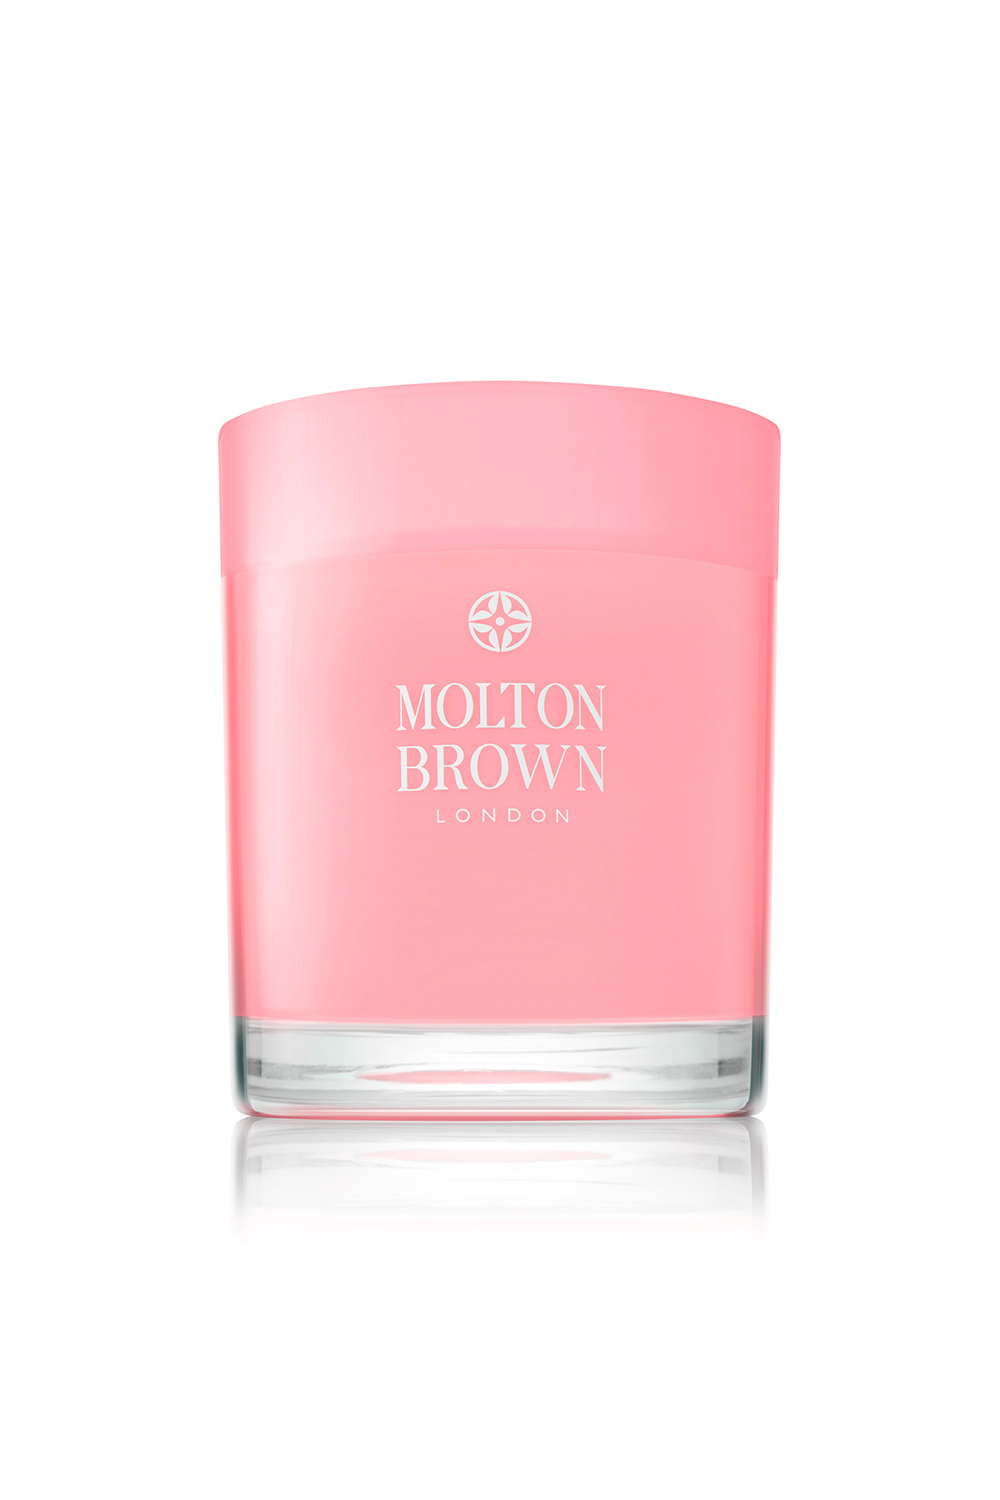 MOLTON BROWN – Κερί Delicious Rhubarb & Rose Single Wick- 180g 1521941.0-0000